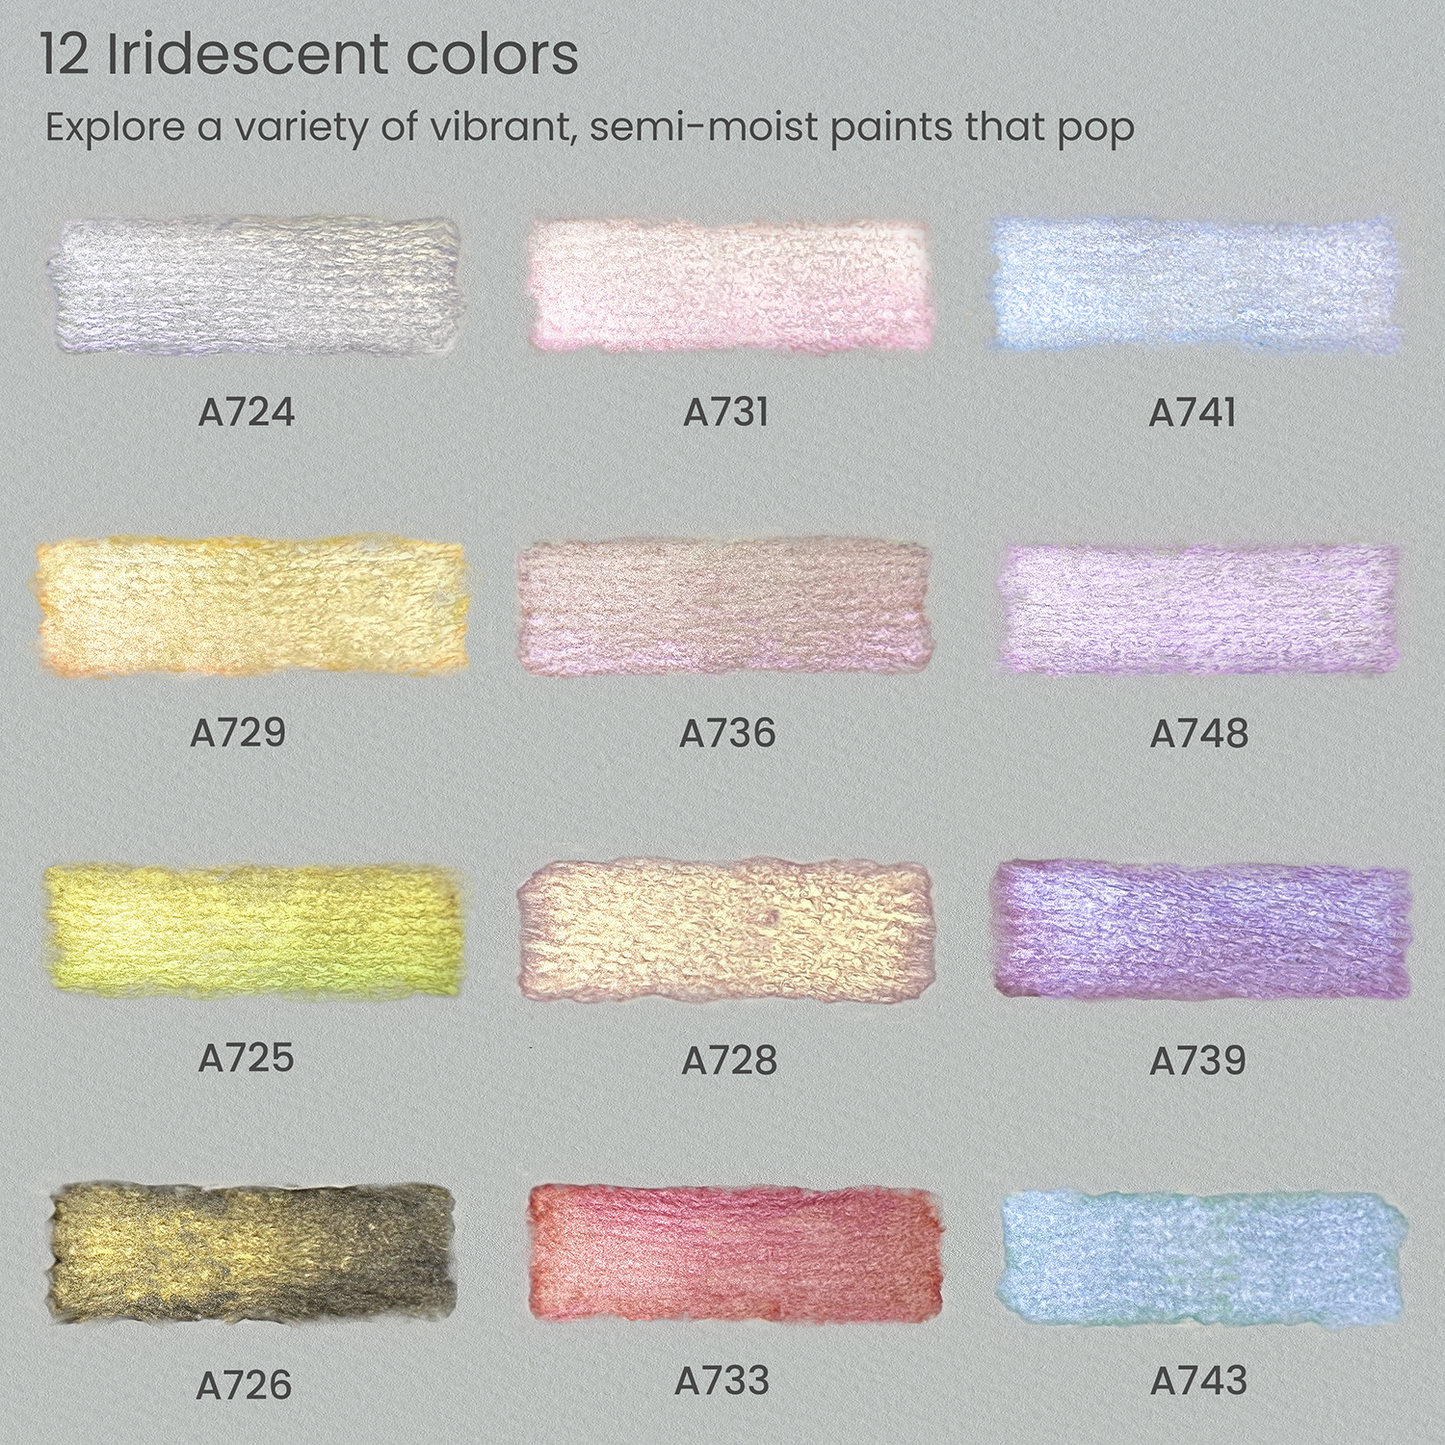 Metallic & Iridescent Watercolor Half Pans, Set of 12 Colors, Enchante –